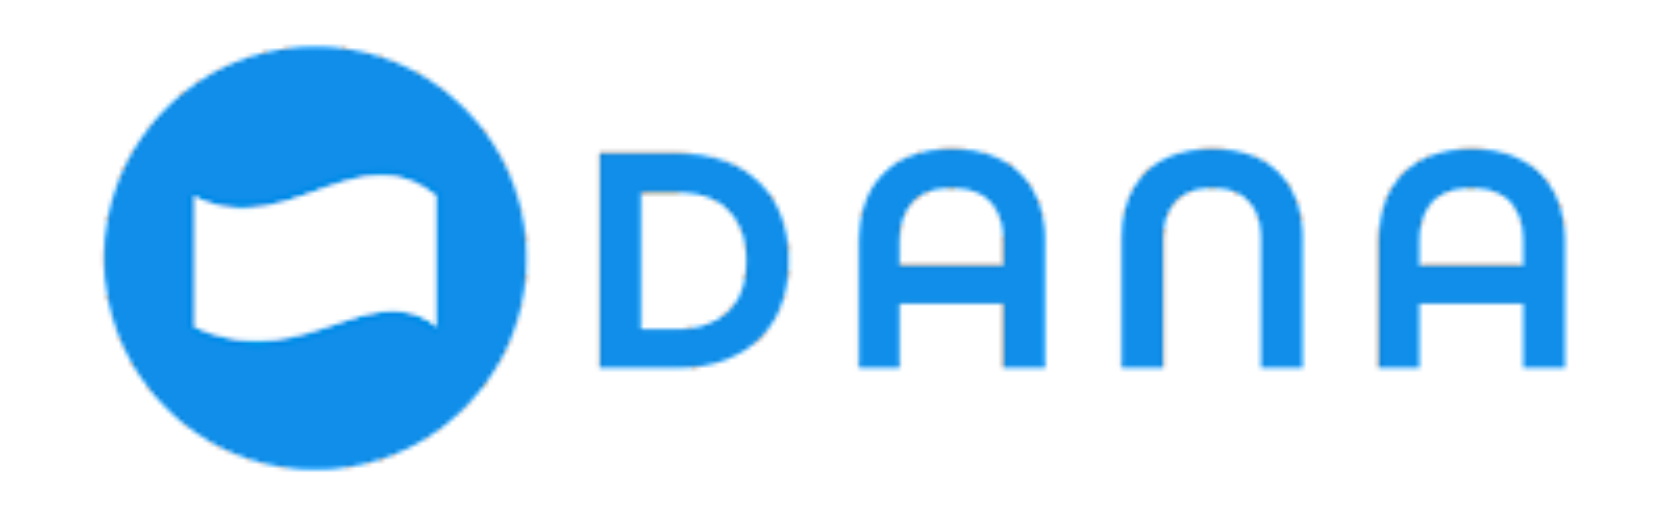 Logo-Dana.png